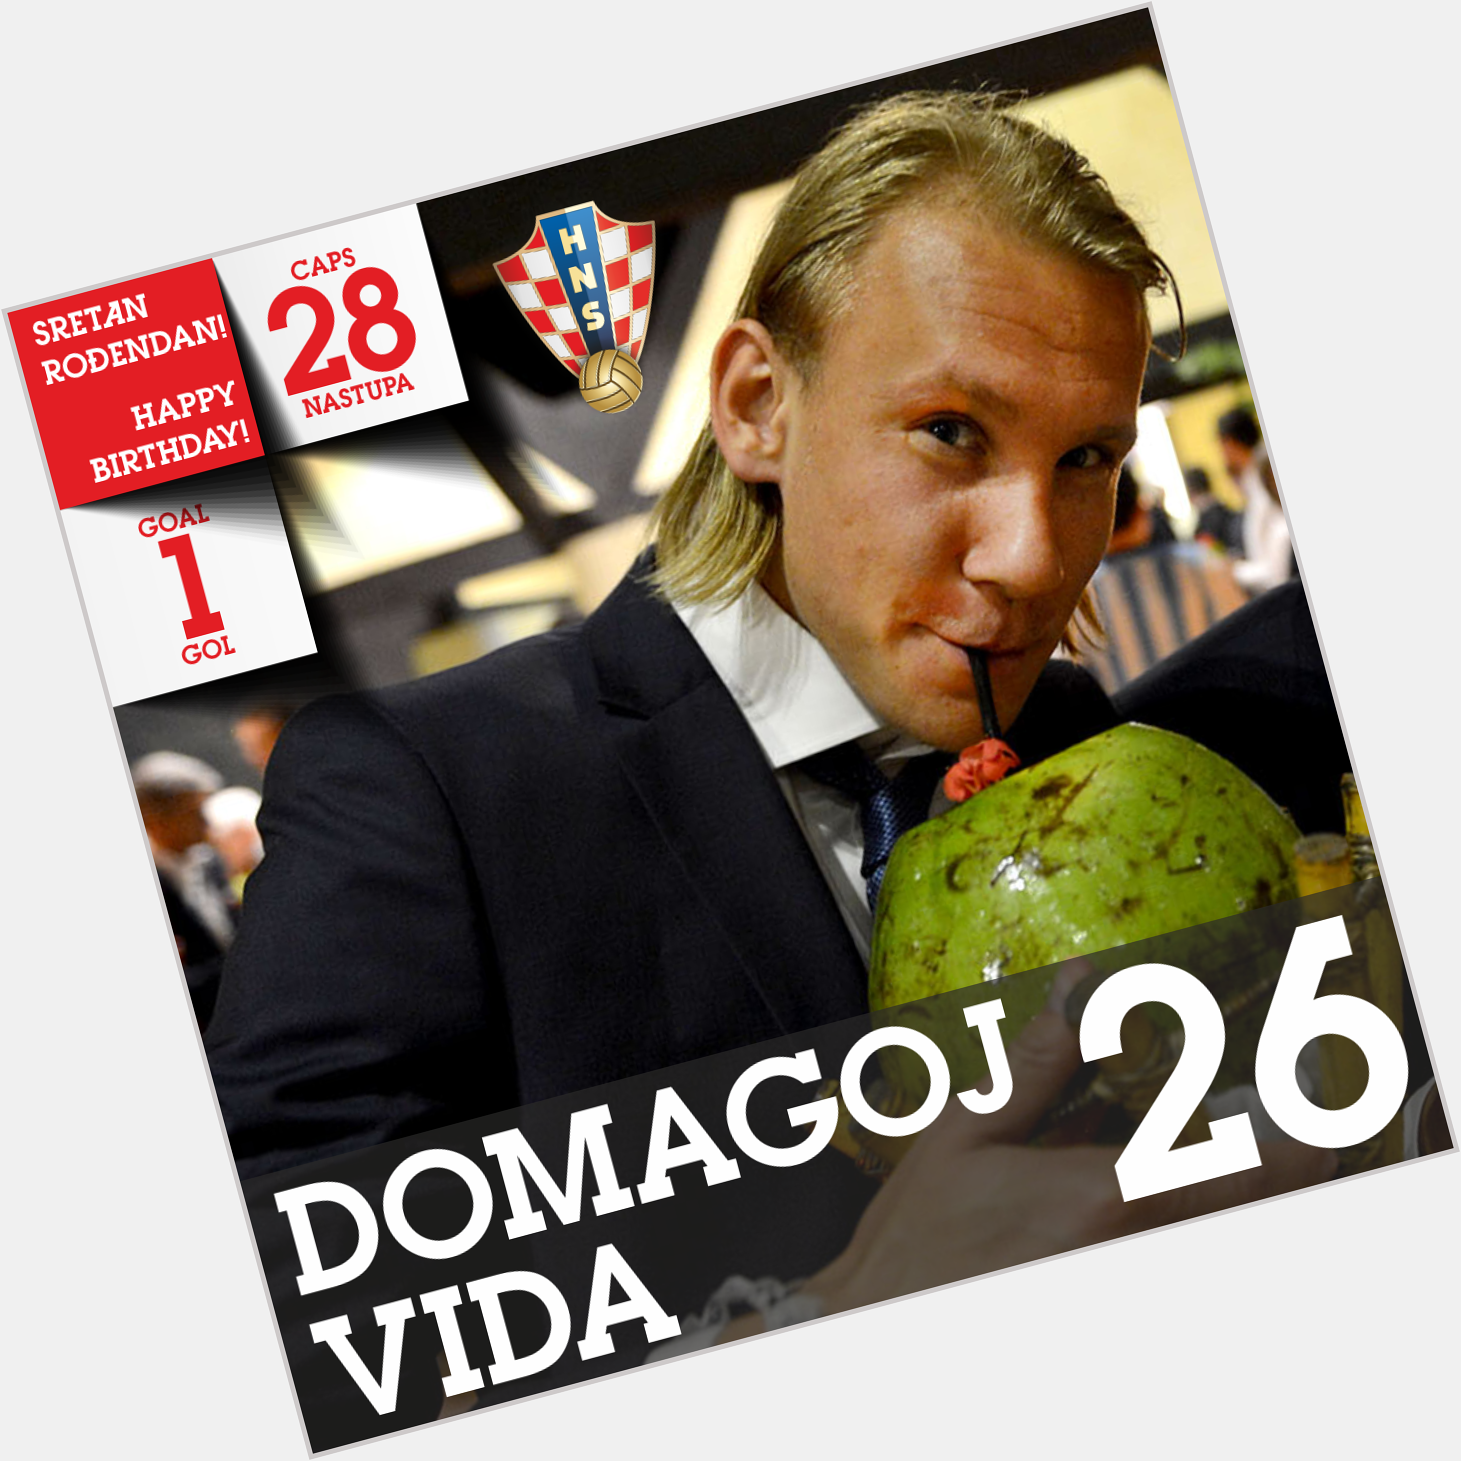 Happy birthday to Croatian international and Dynamo Kyiv defender Domagoj Vida! 